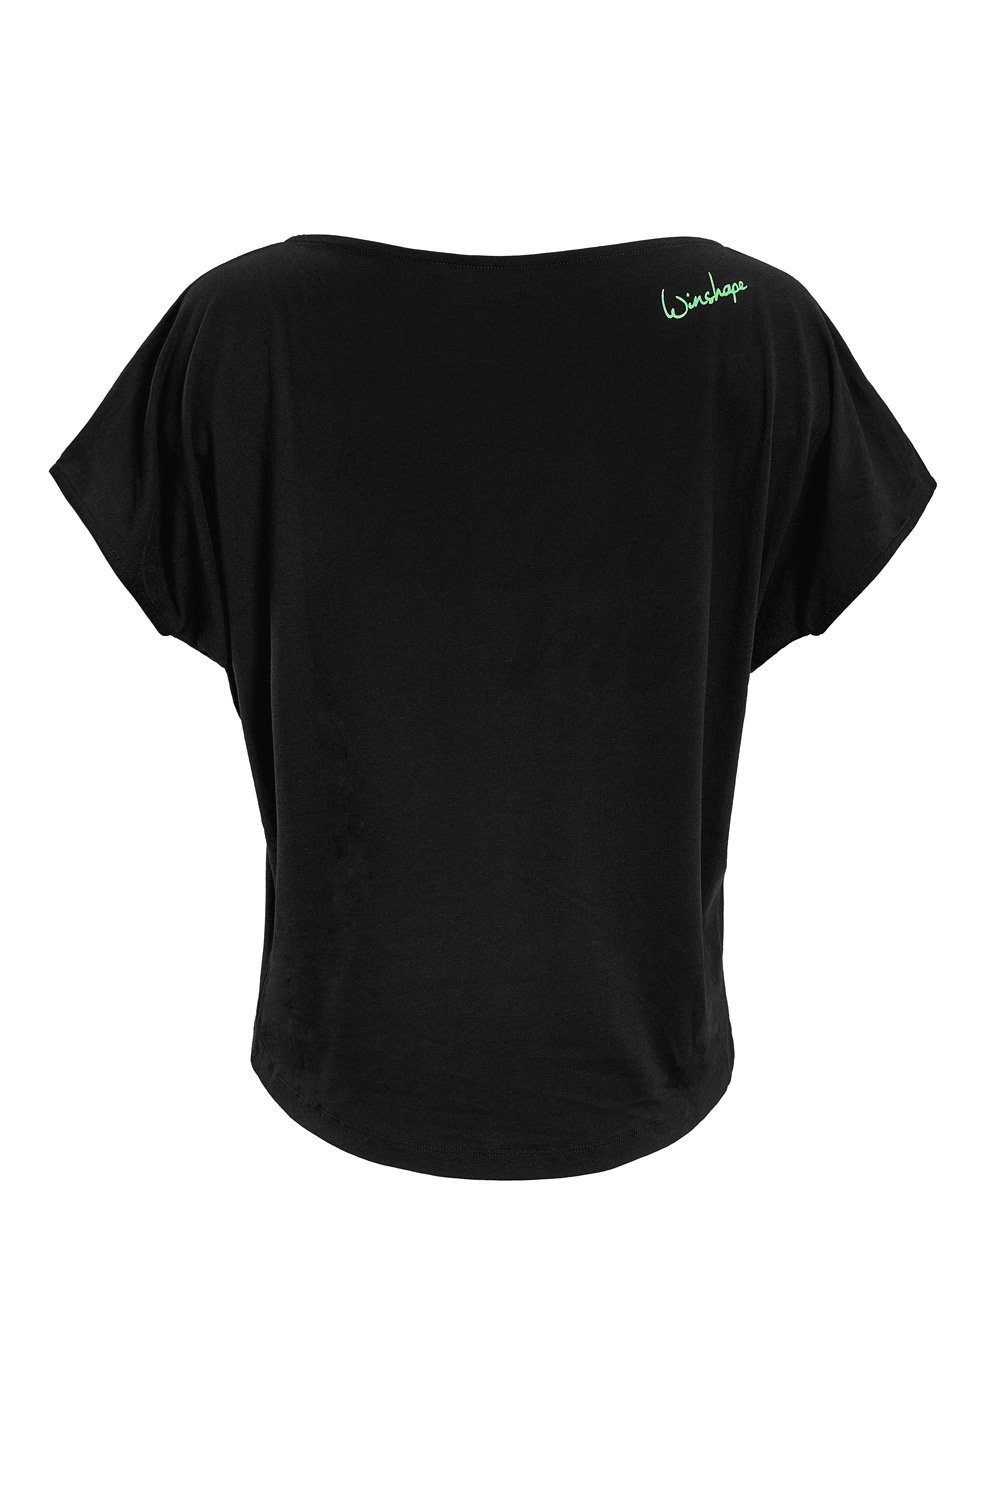 Winshape Oversize-Shirt MCT002 Neon leicht Glitzer-Aufdruck ultra mit grünem